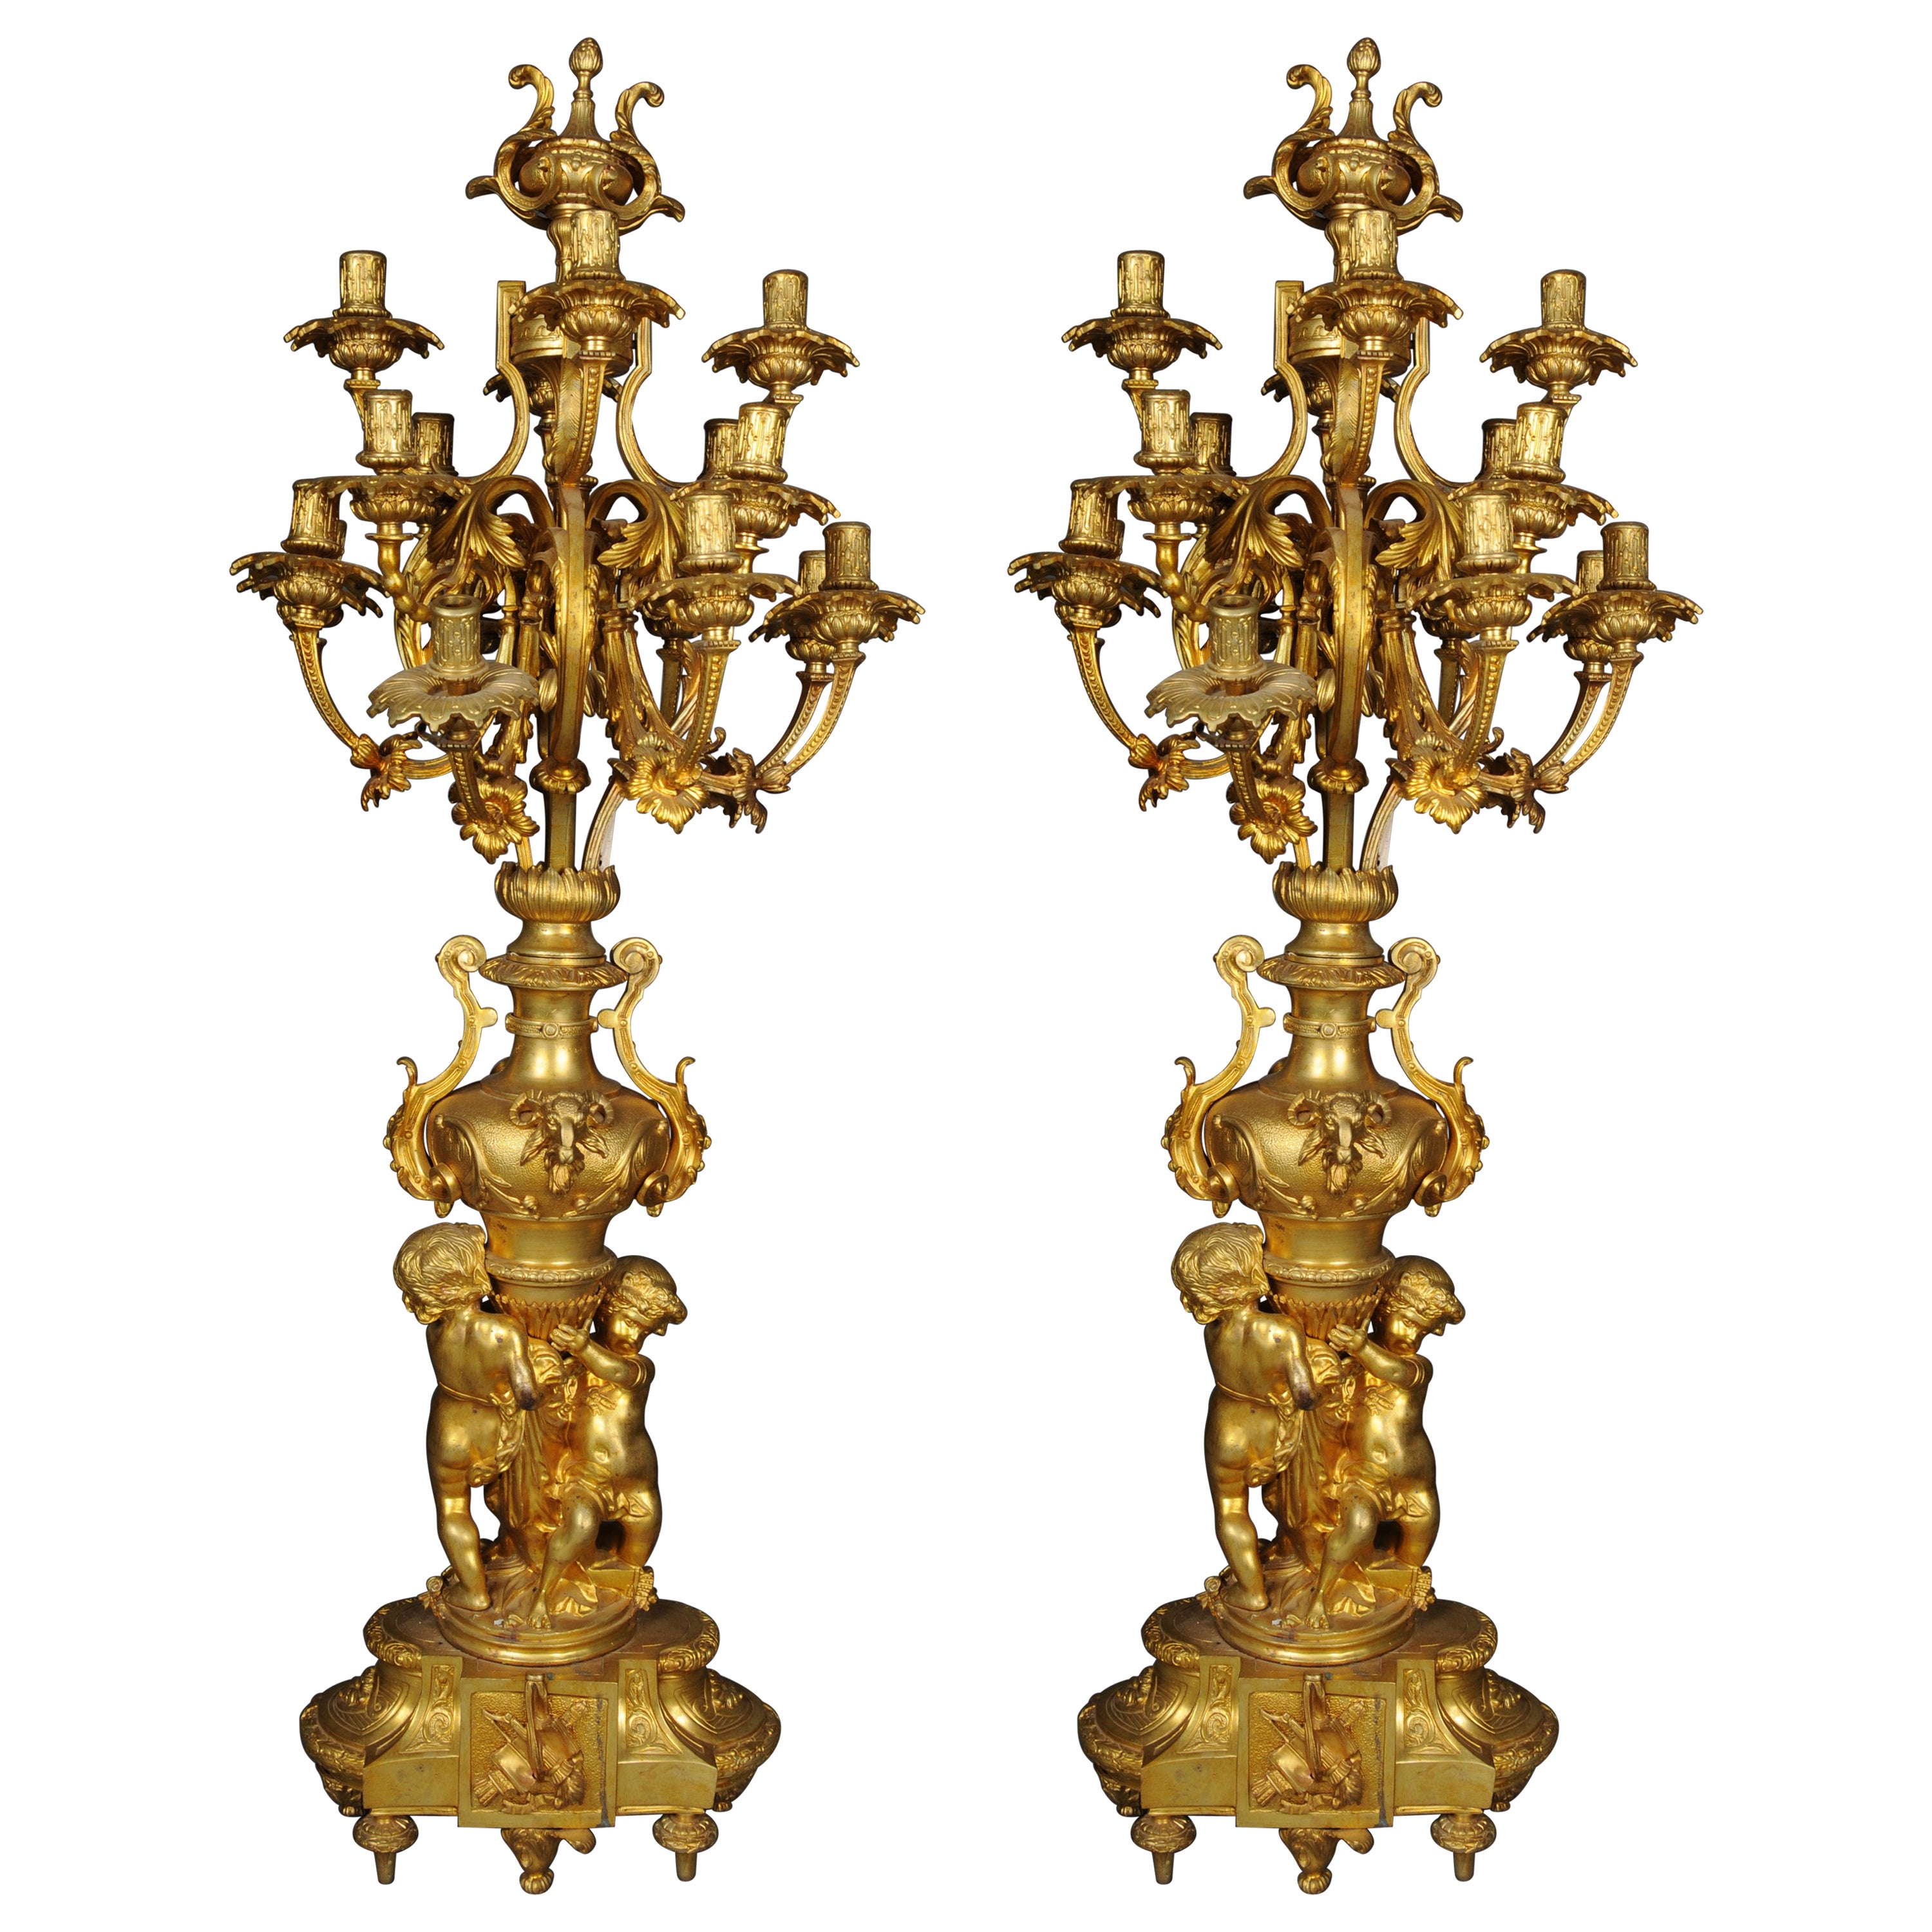 Pair (2) monumental royal candlesticks, gilded bronze, Louis XVI